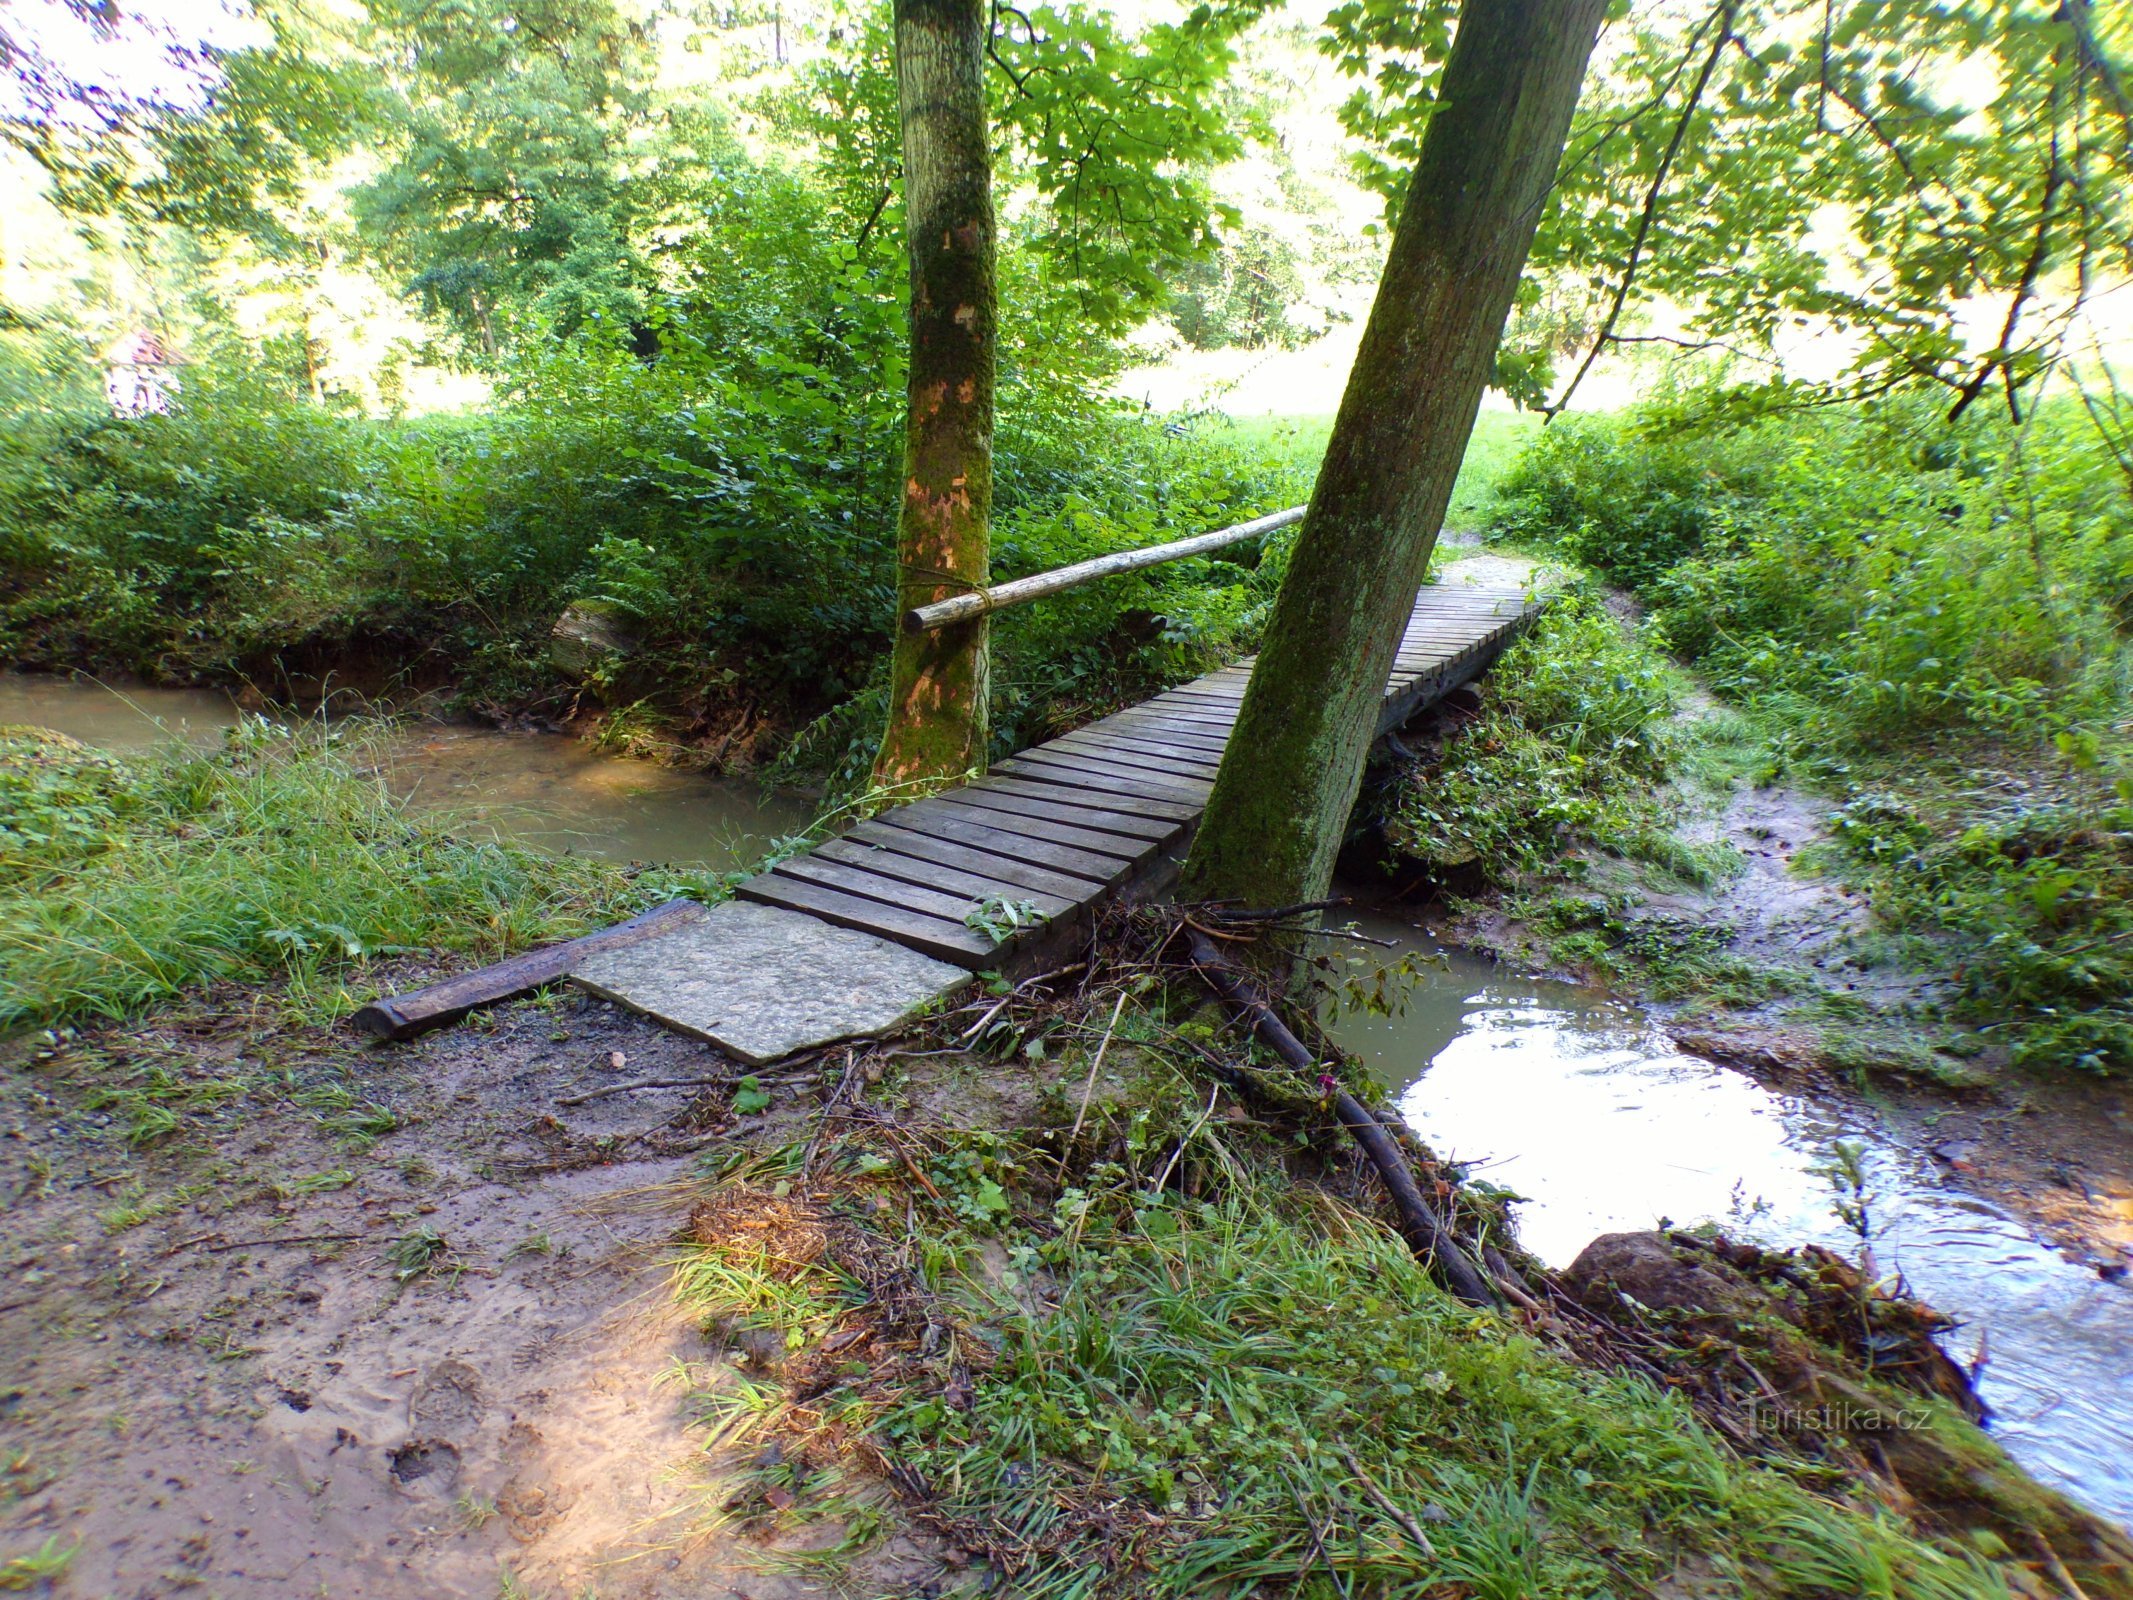 Větrnický potok に架かる橋から Větrník の下のチャペル (Vestec, 29.8.2022/XNUMX/XNUMX)